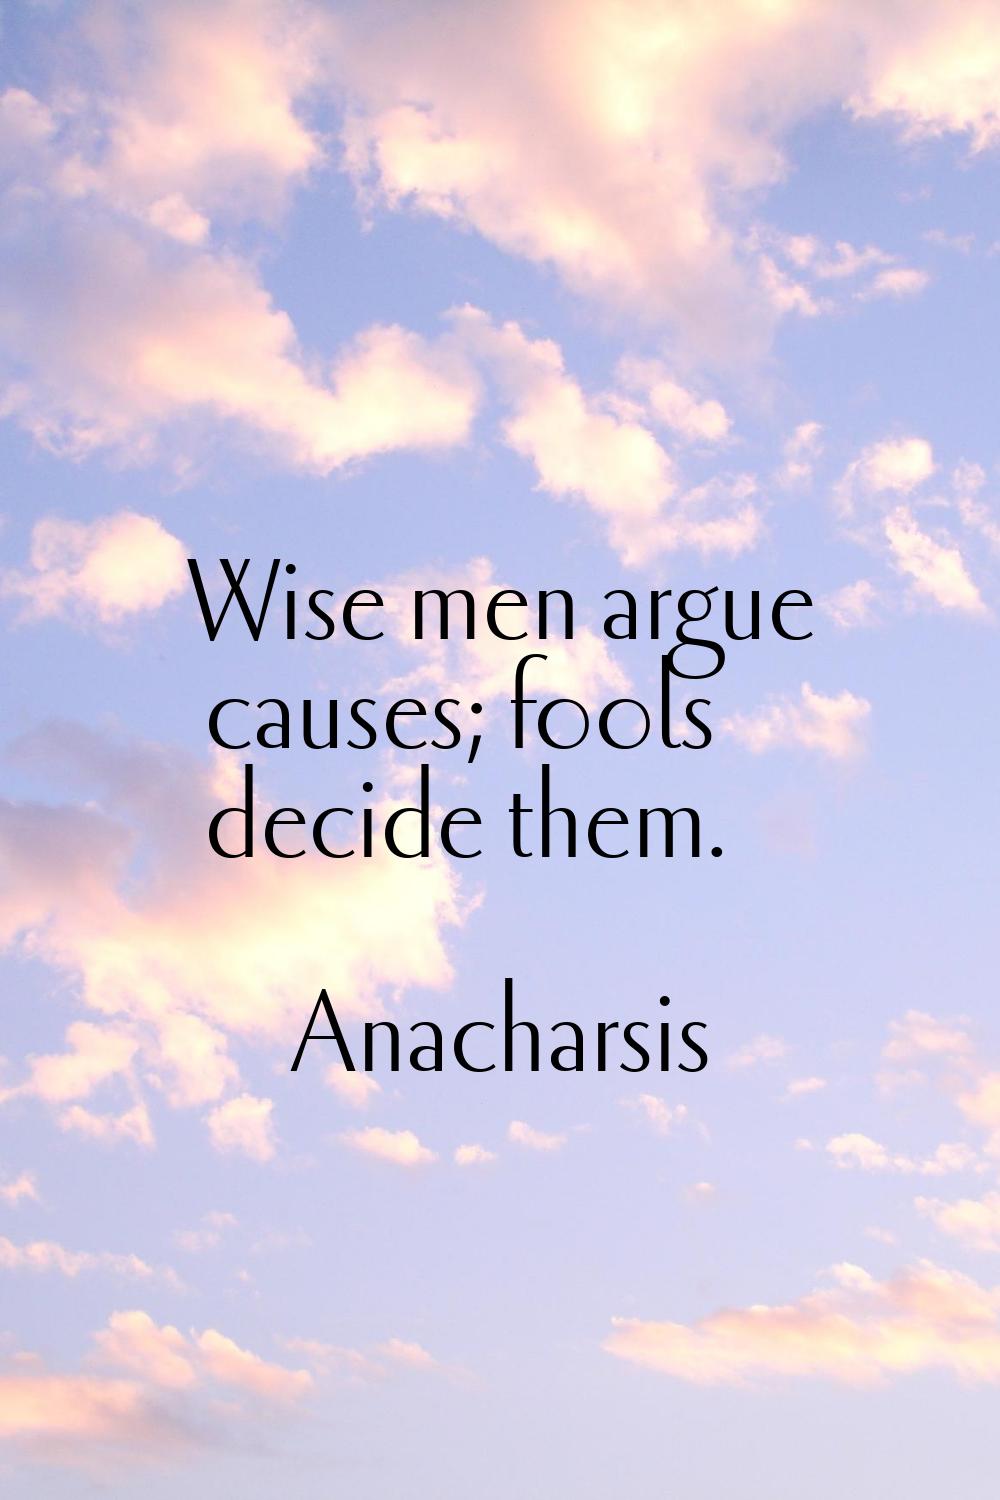 Wise men argue causes; fools decide them.